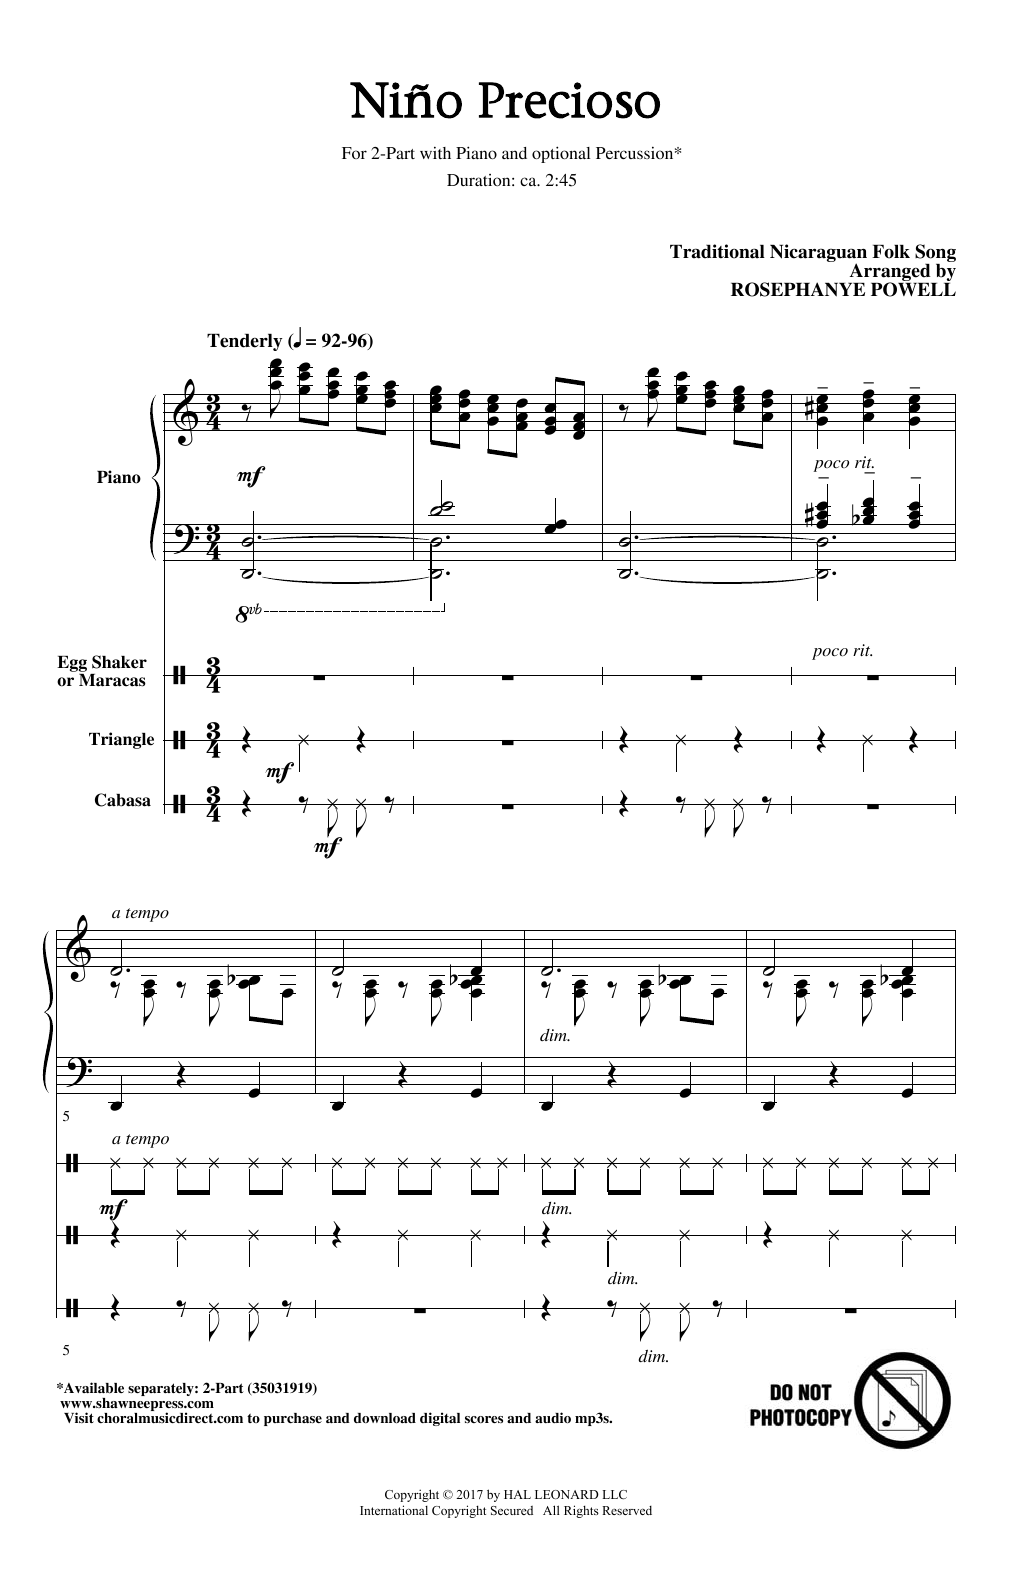 Trad. Nicaraguan Folk Song Nino Precioso (arr. Rosephanye Powell) Sheet Music Notes & Chords for 2-Part Choir - Download or Print PDF